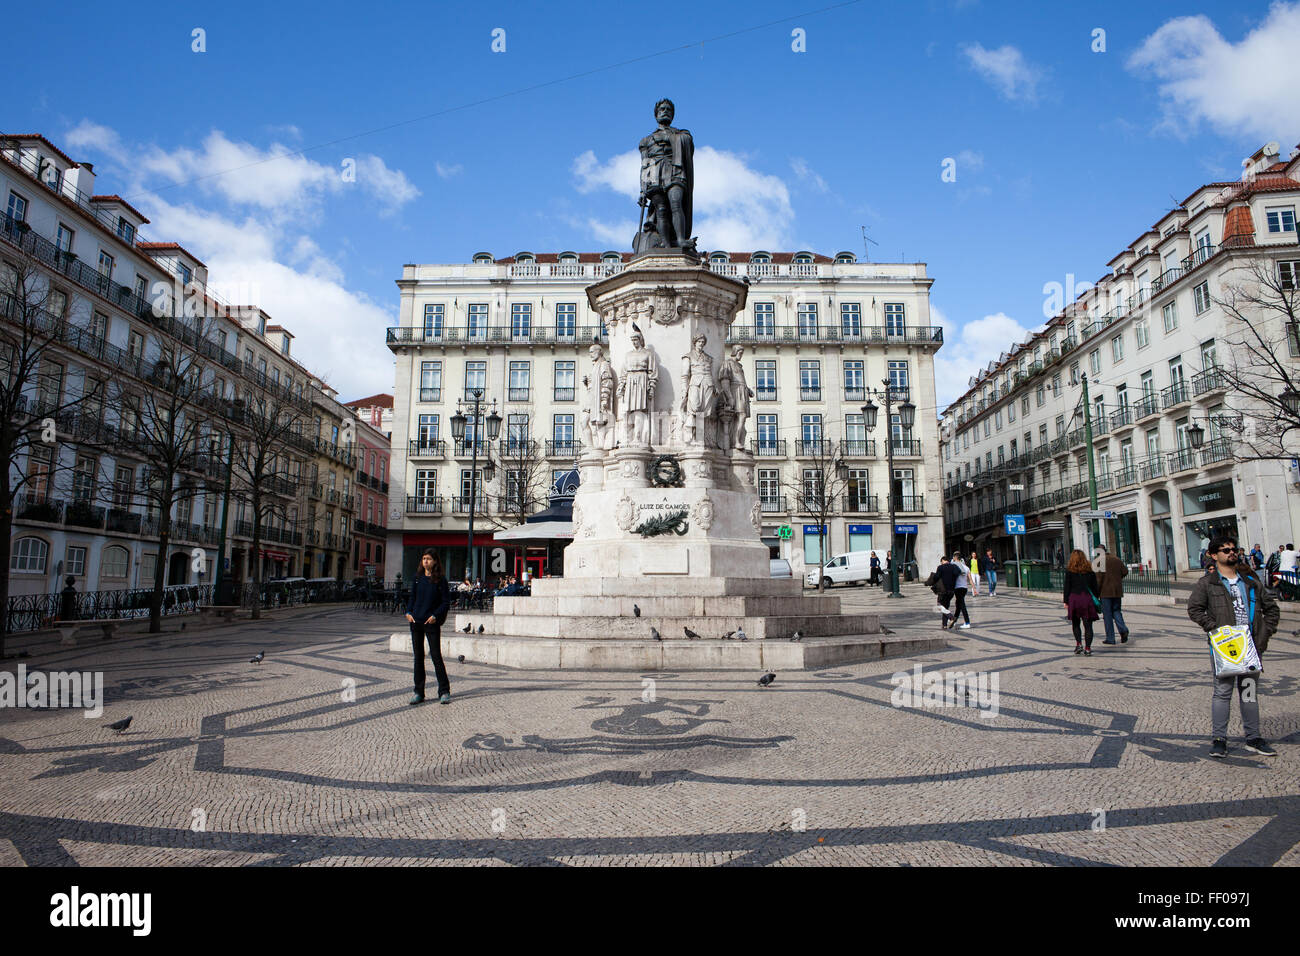 Portugal, city of Lisbon, Luis de Camoes Square Stock Photo - Alamy